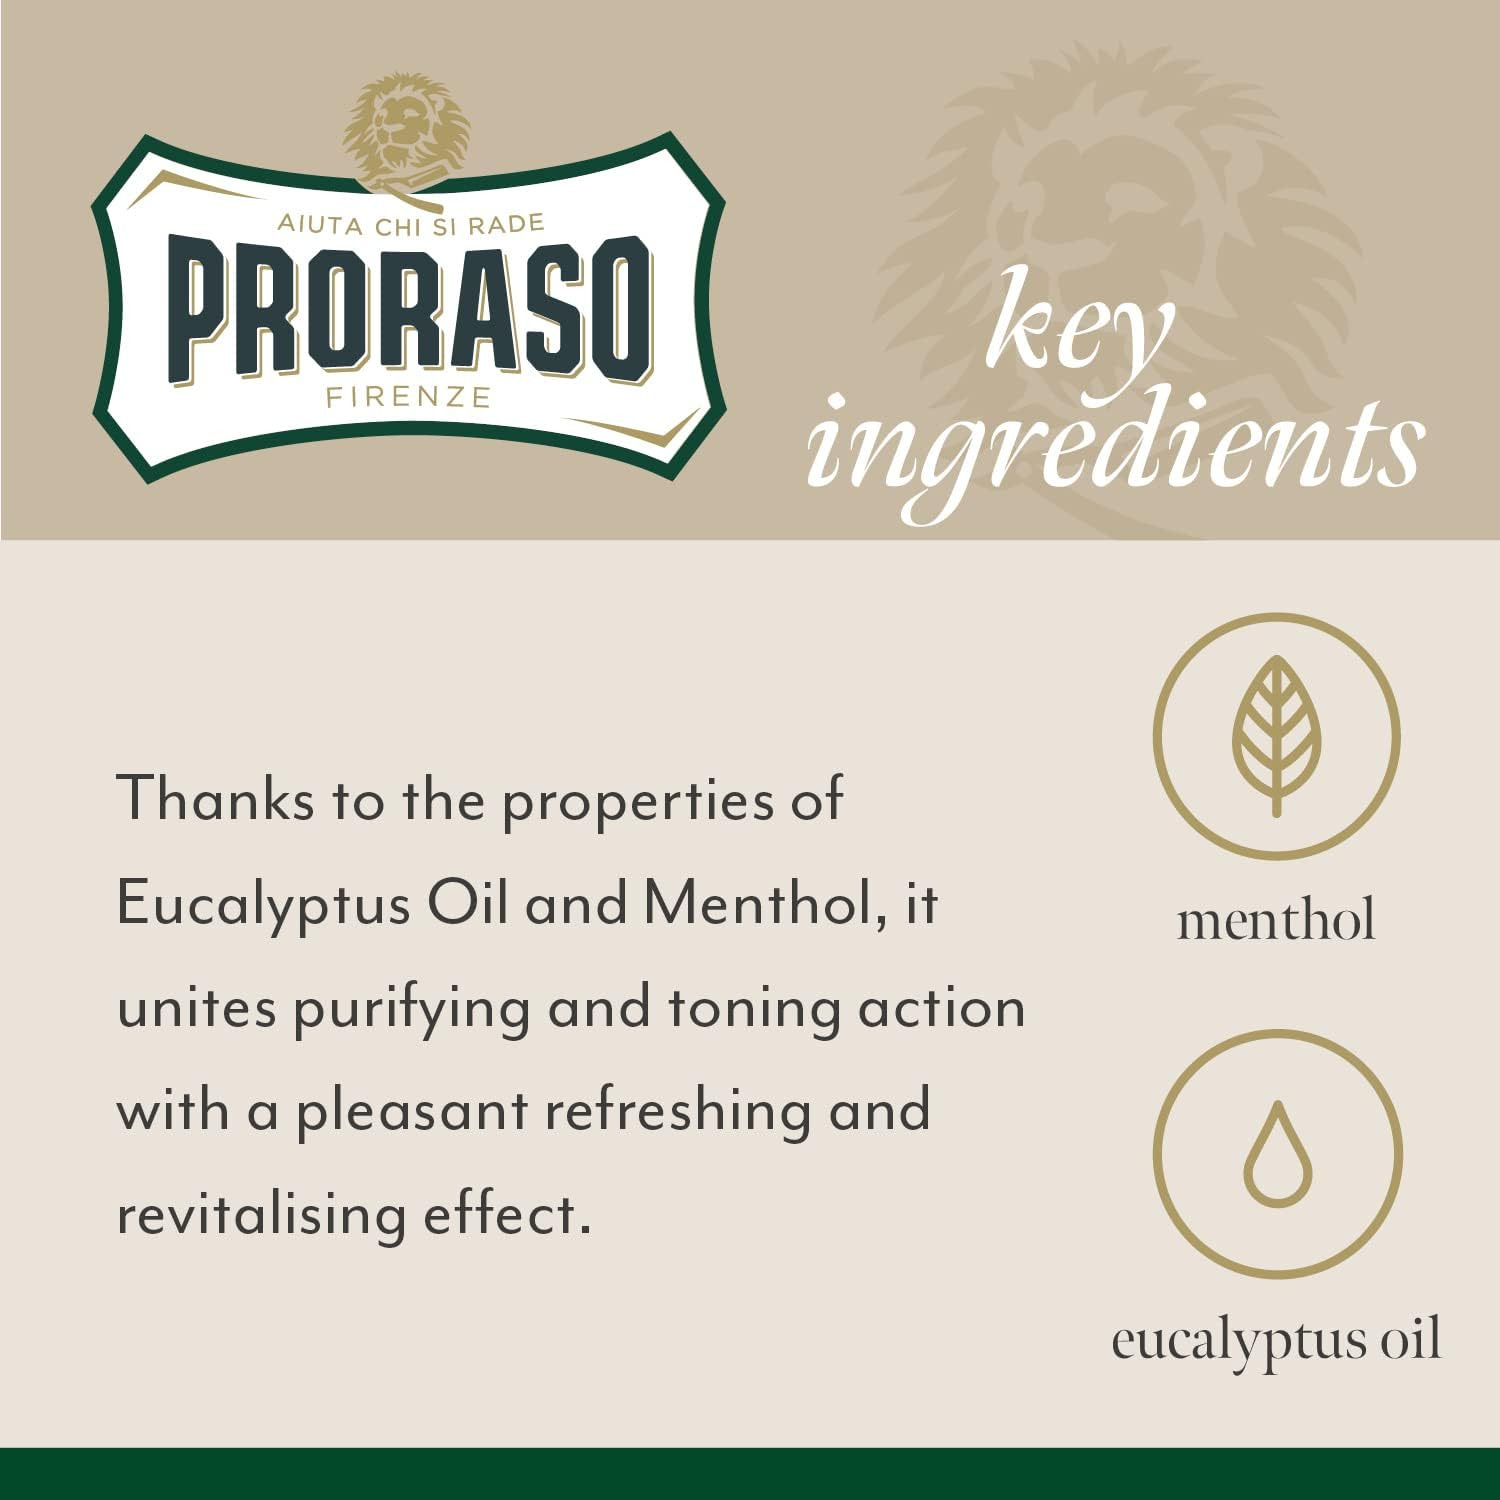 Proraso Pre-Shave Cream with Menthol